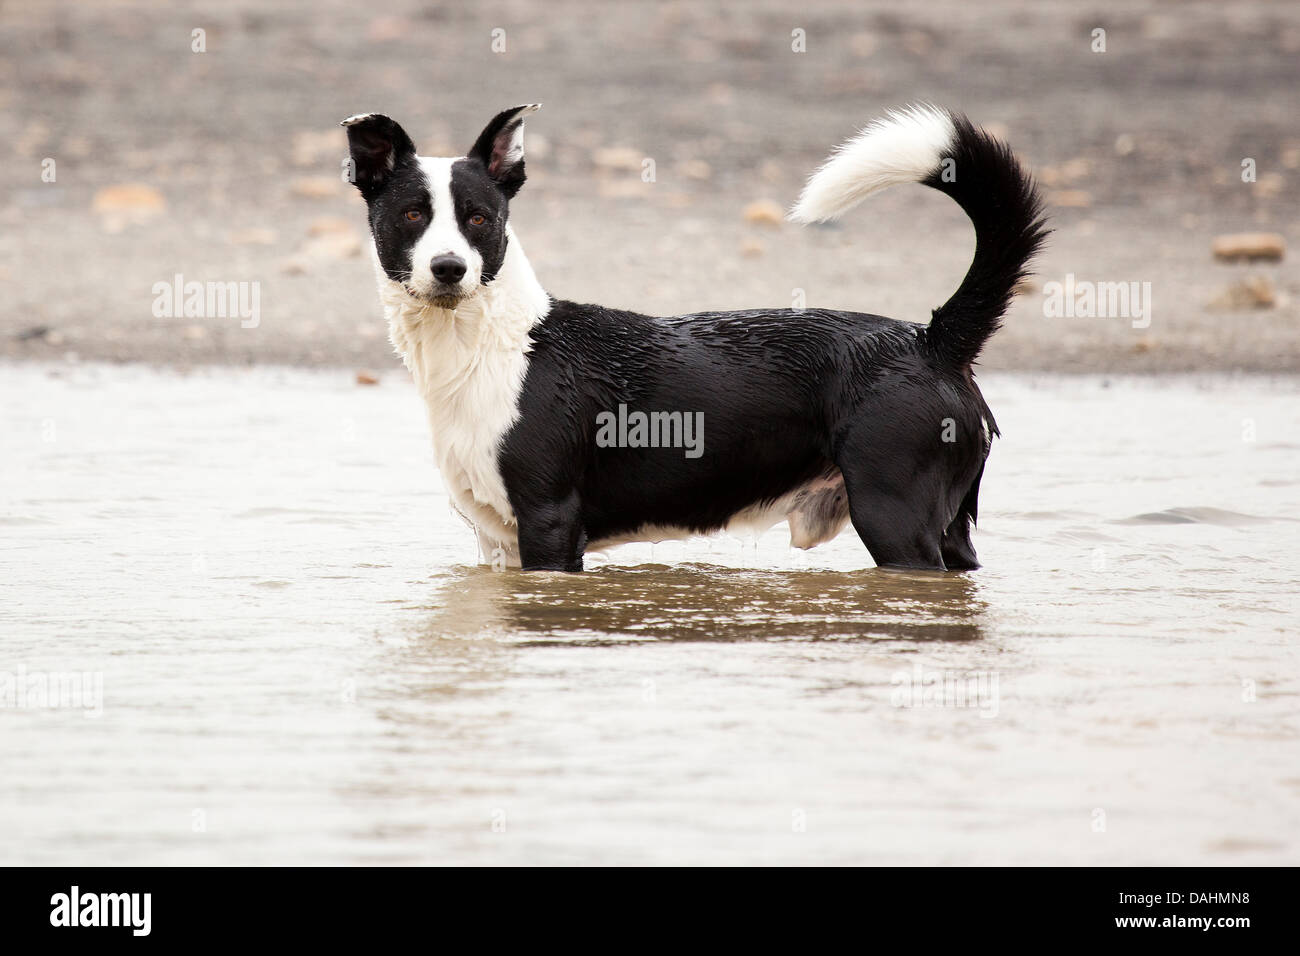 Jake - swimming dog Stock Photo